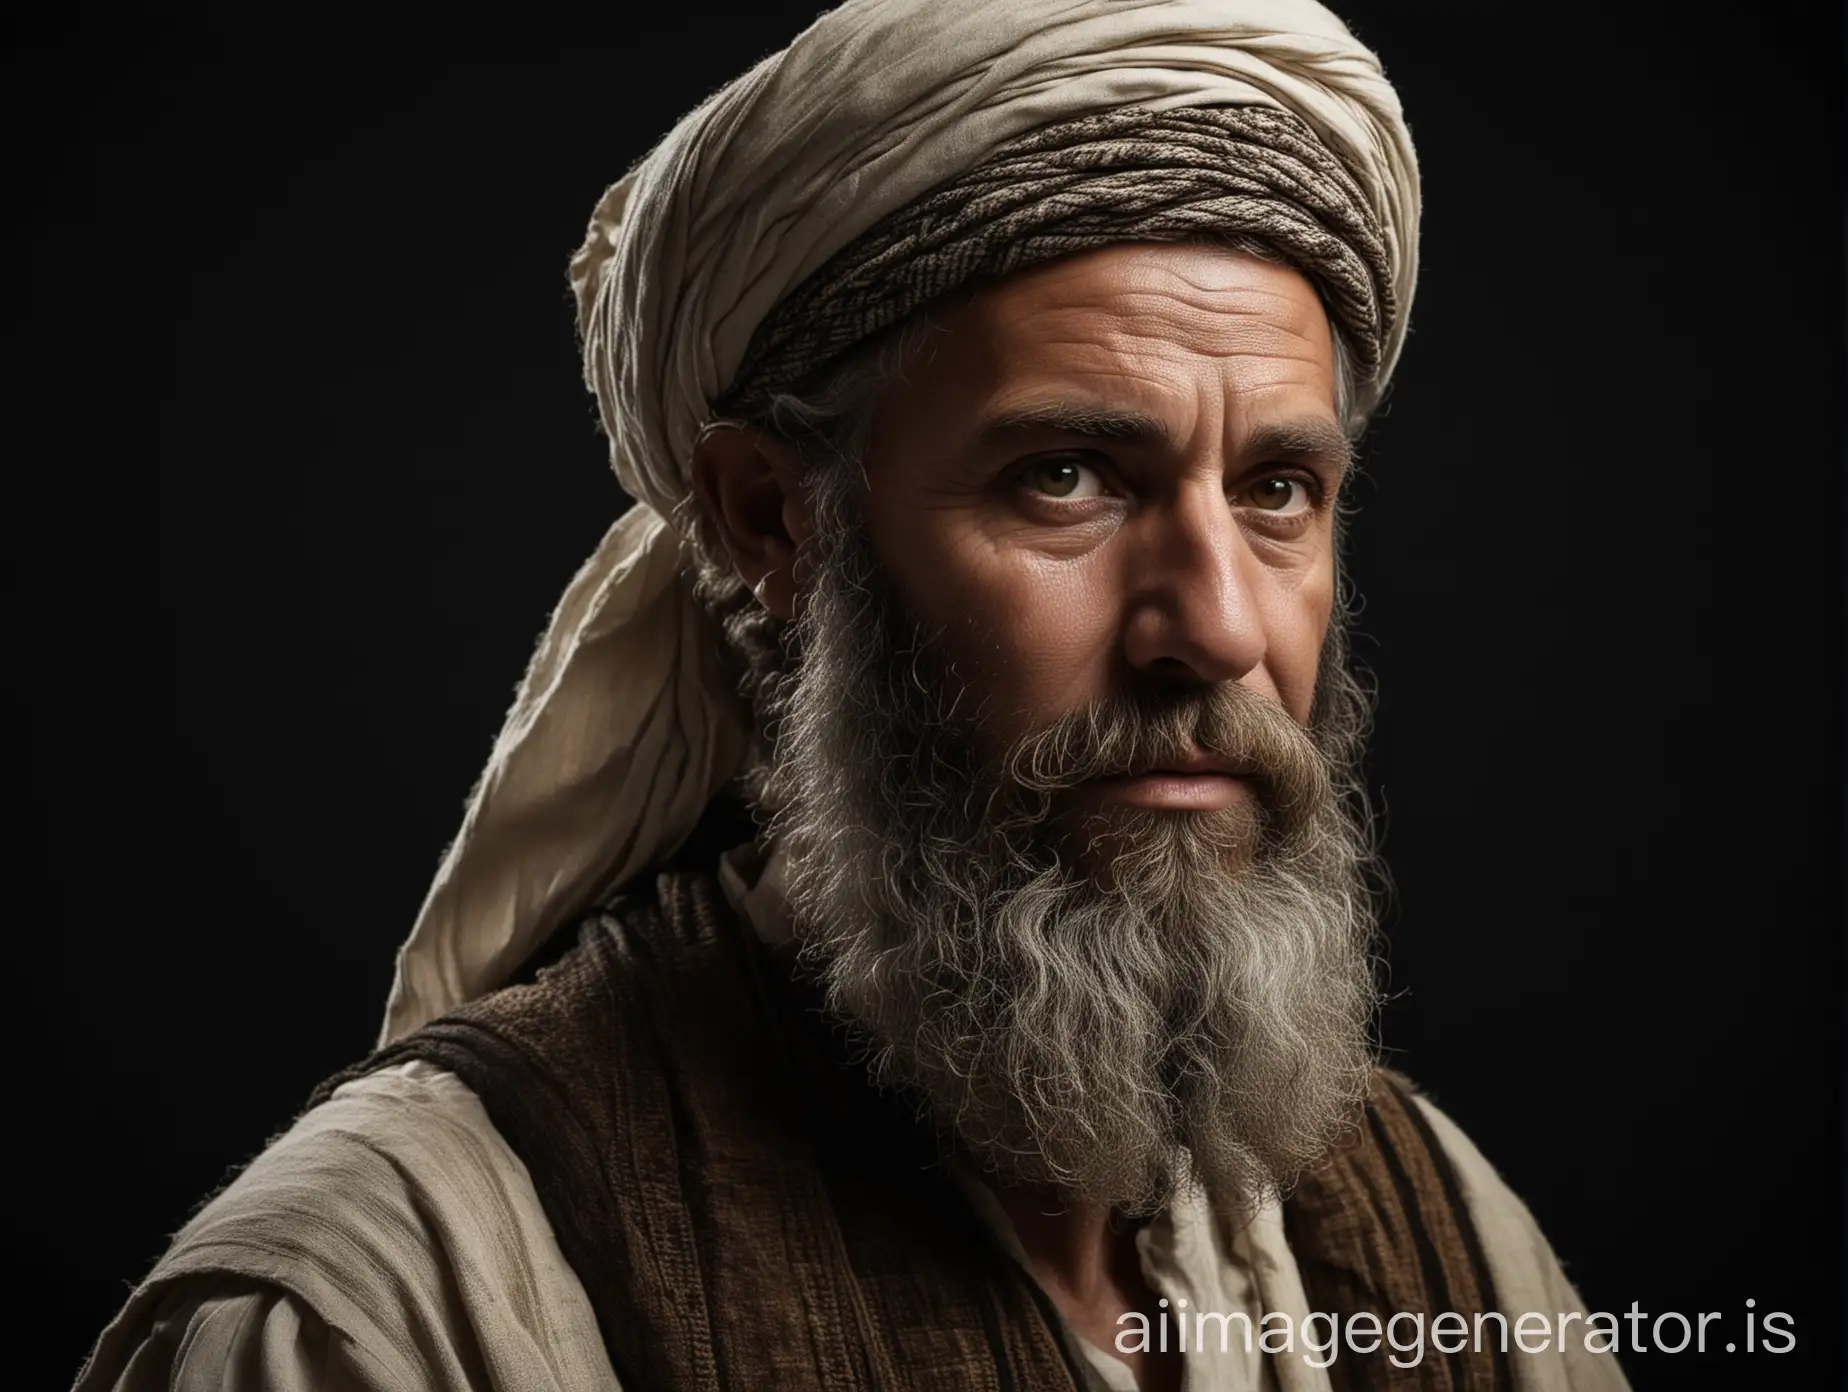 A middle-aged, short bearded Israelite prophet. Black background.